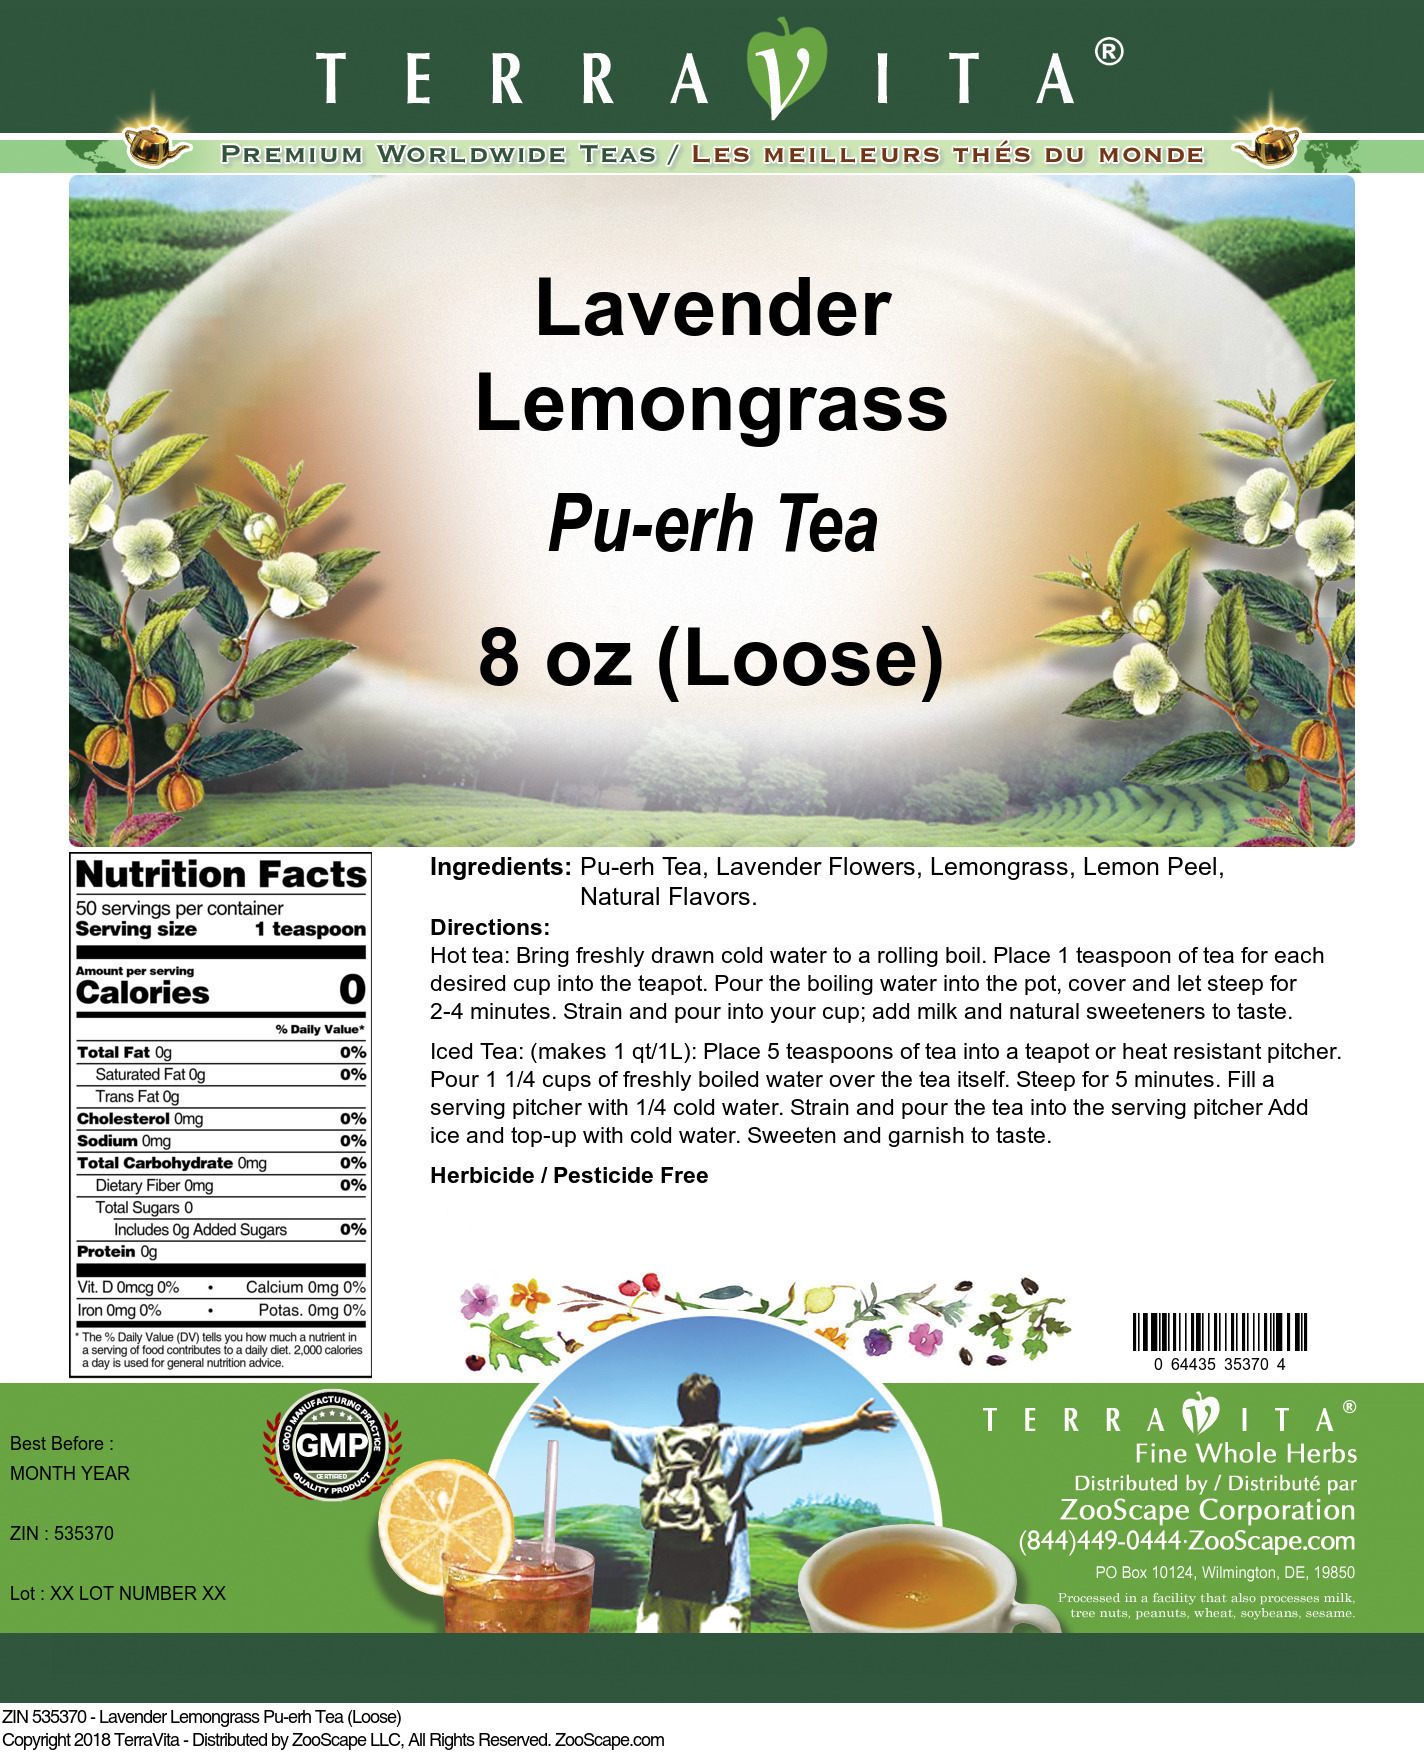 Lavender Lemongrass Pu-erh Tea (Loose) - Label